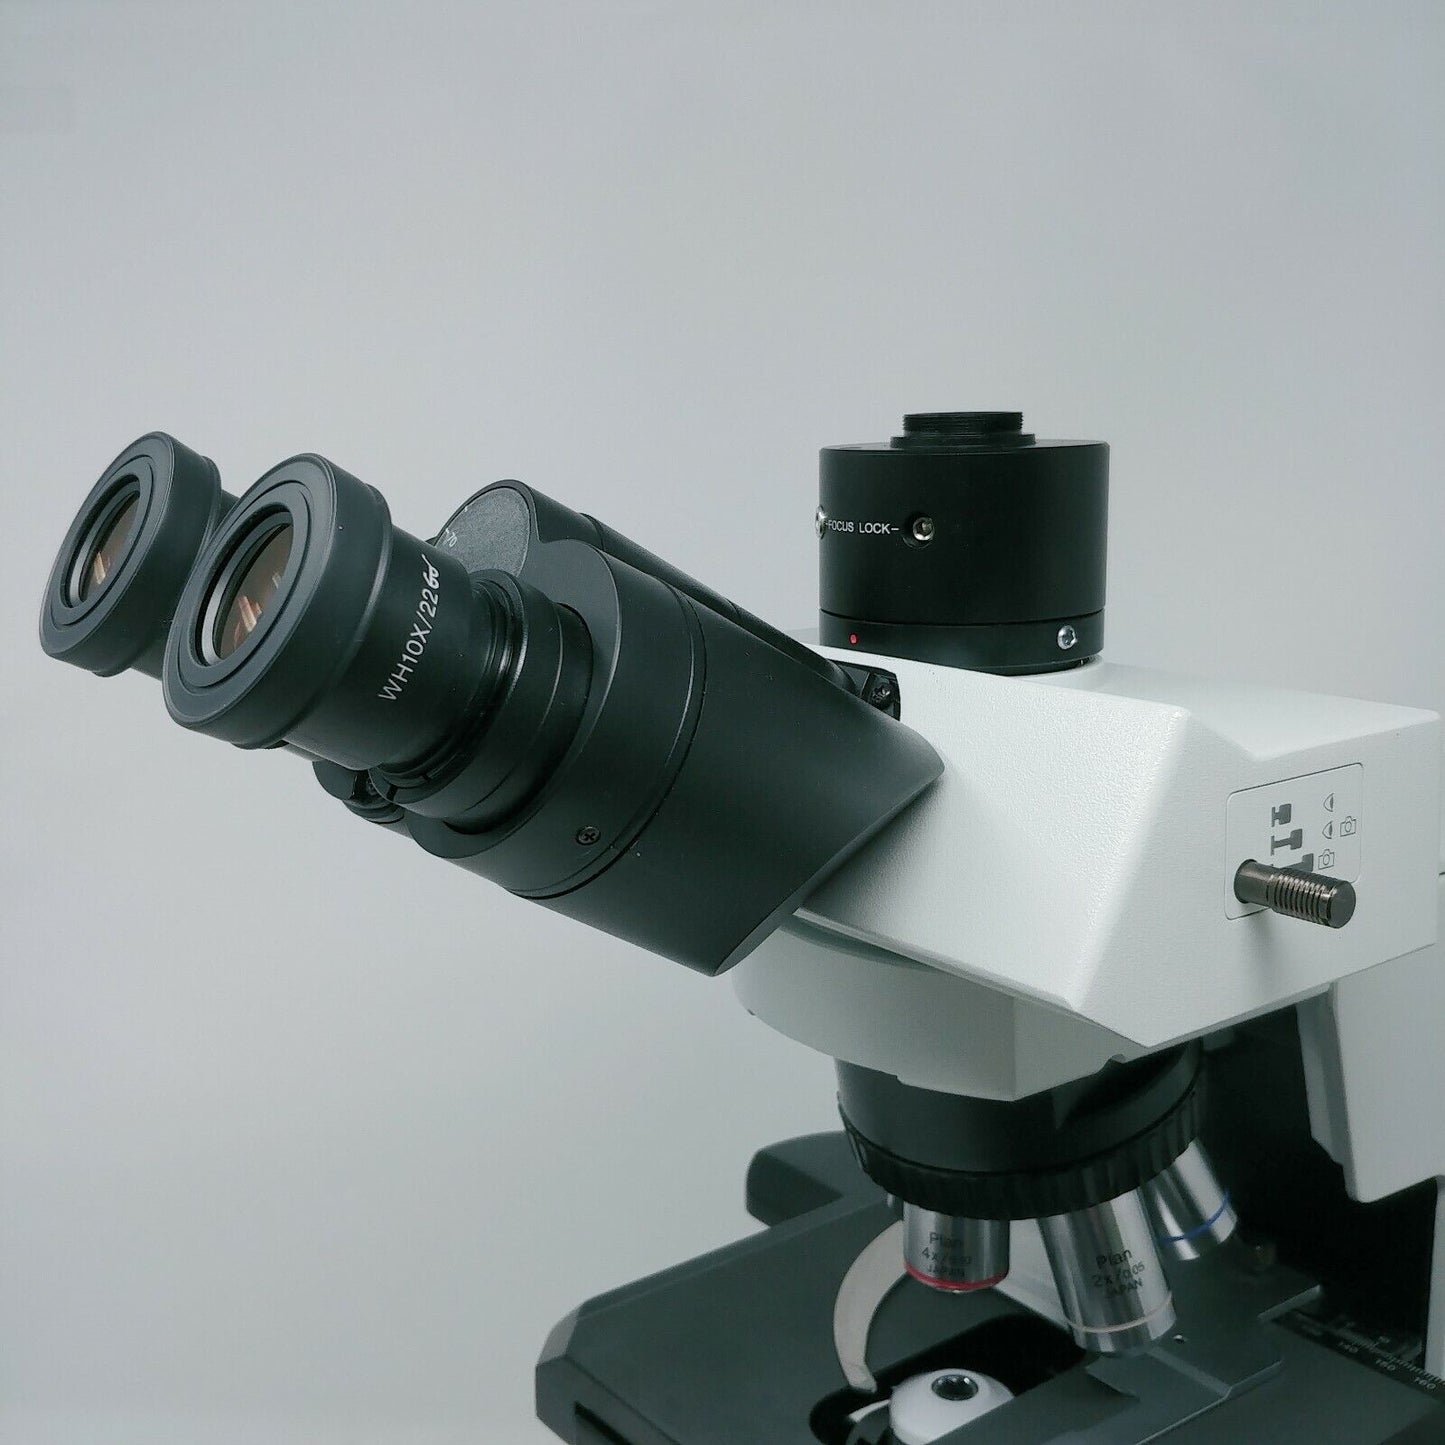 Olympus Microscope BX41 with 2x and Trinocular Head - microscopemarketplace